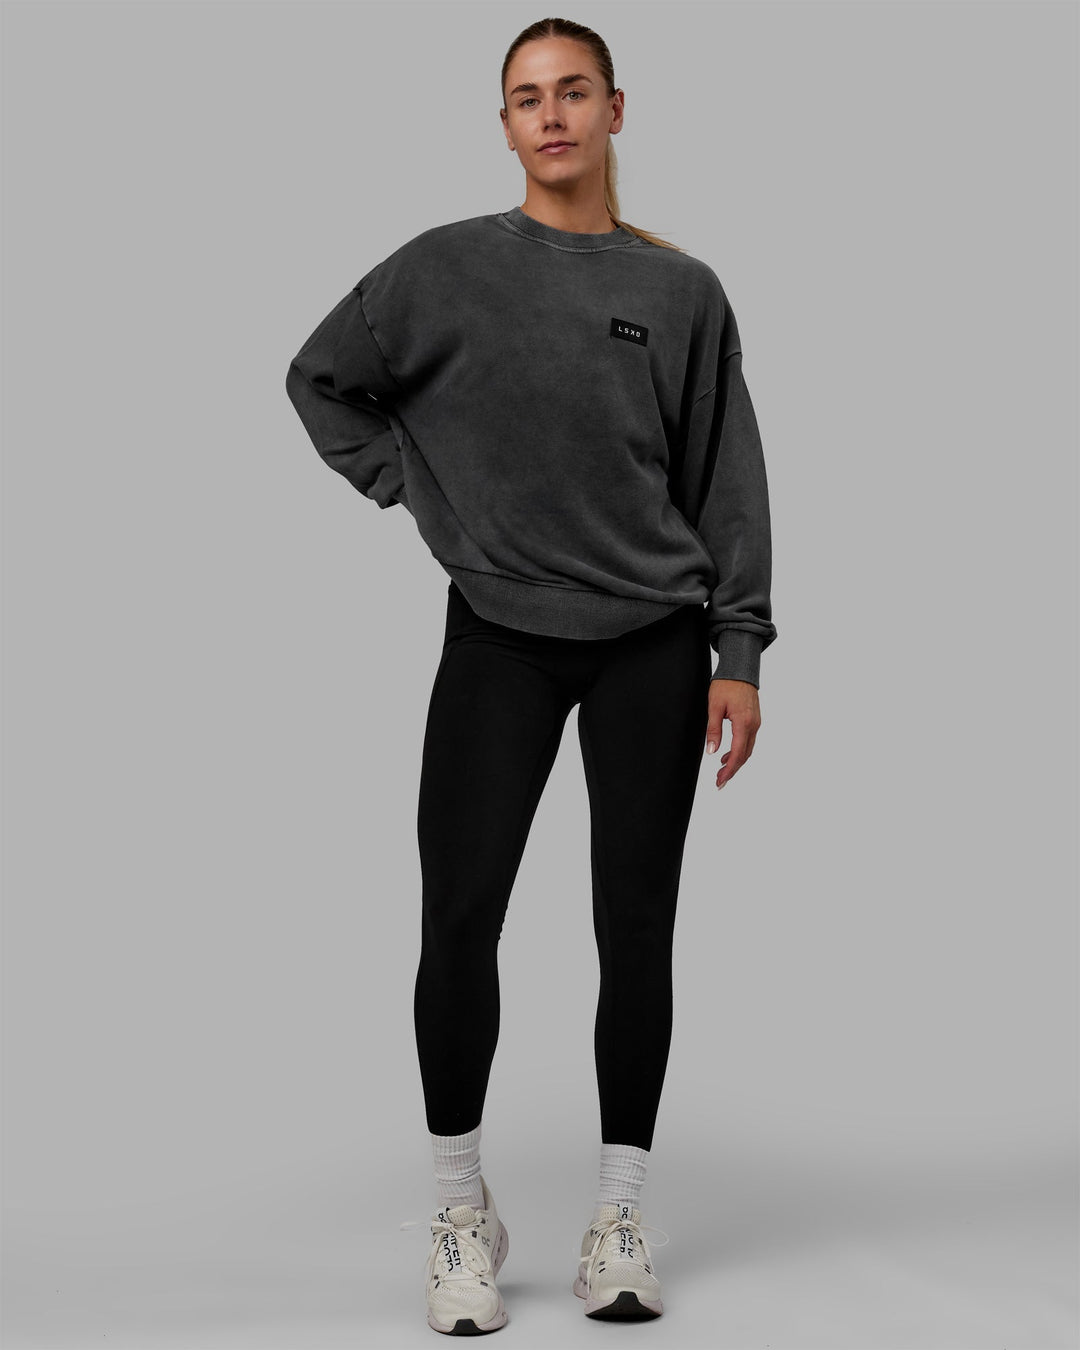 Woman wearing Unisex Washed Segmented Sweater Oversize - Black